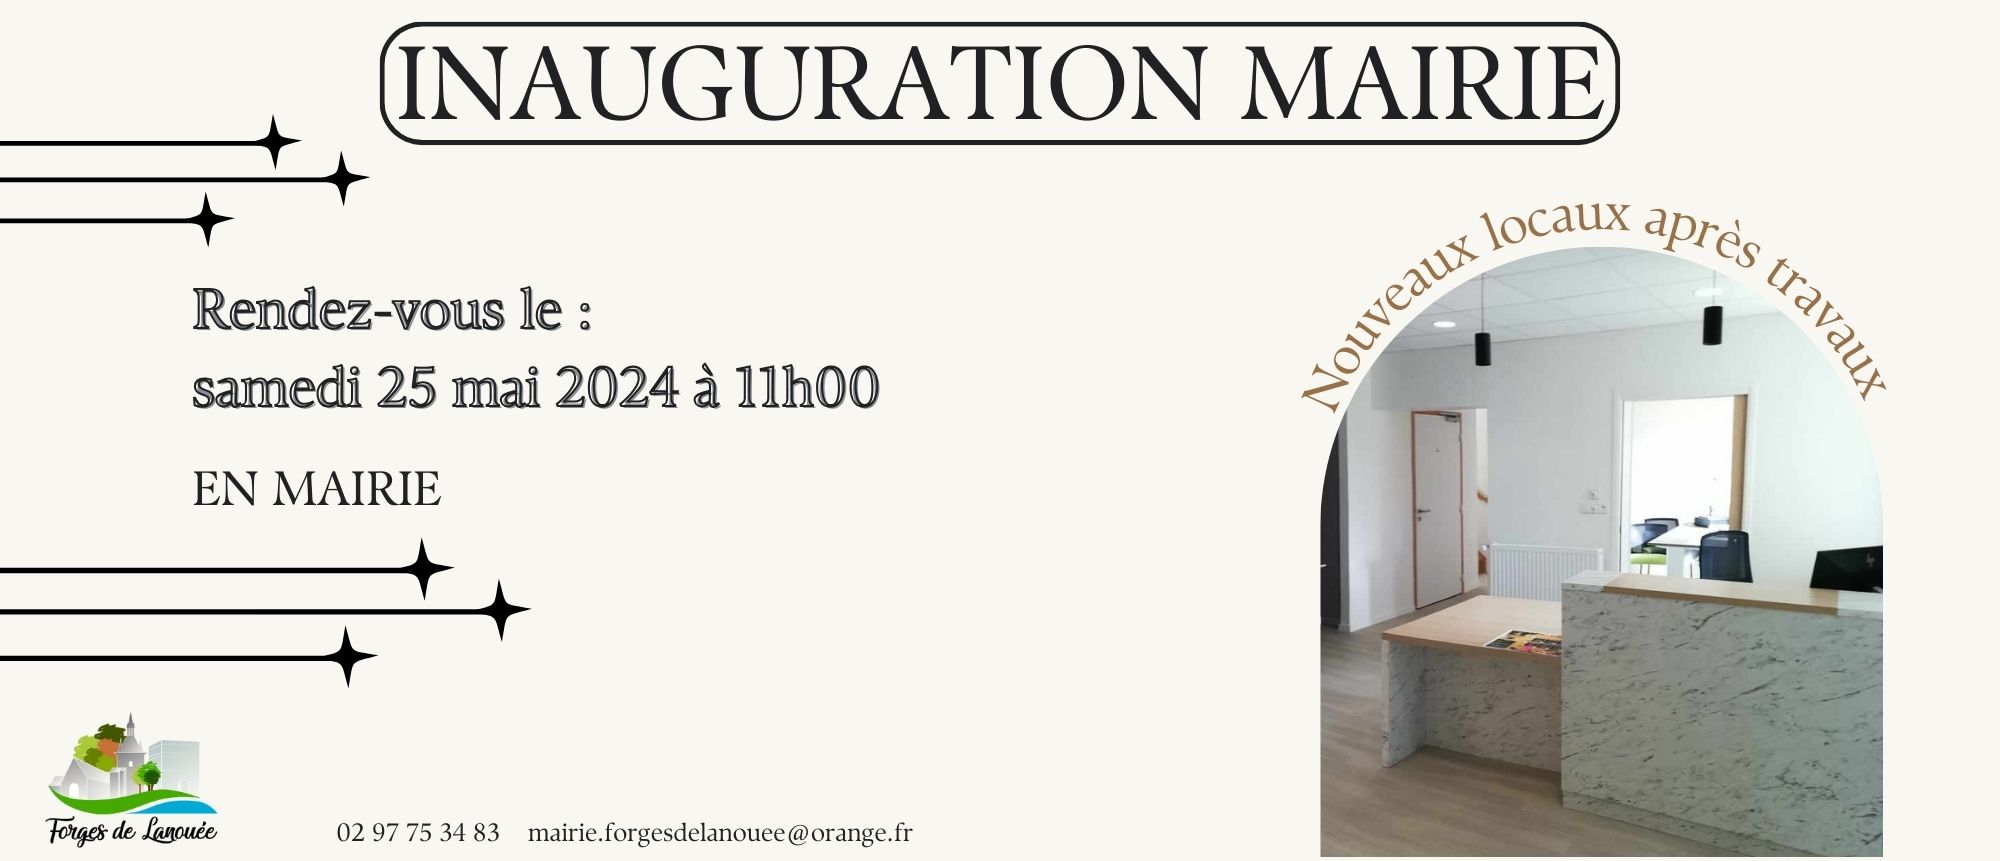 invitation inauguration Mairie apres travaux 25 mai 2024 209 x 90 mm